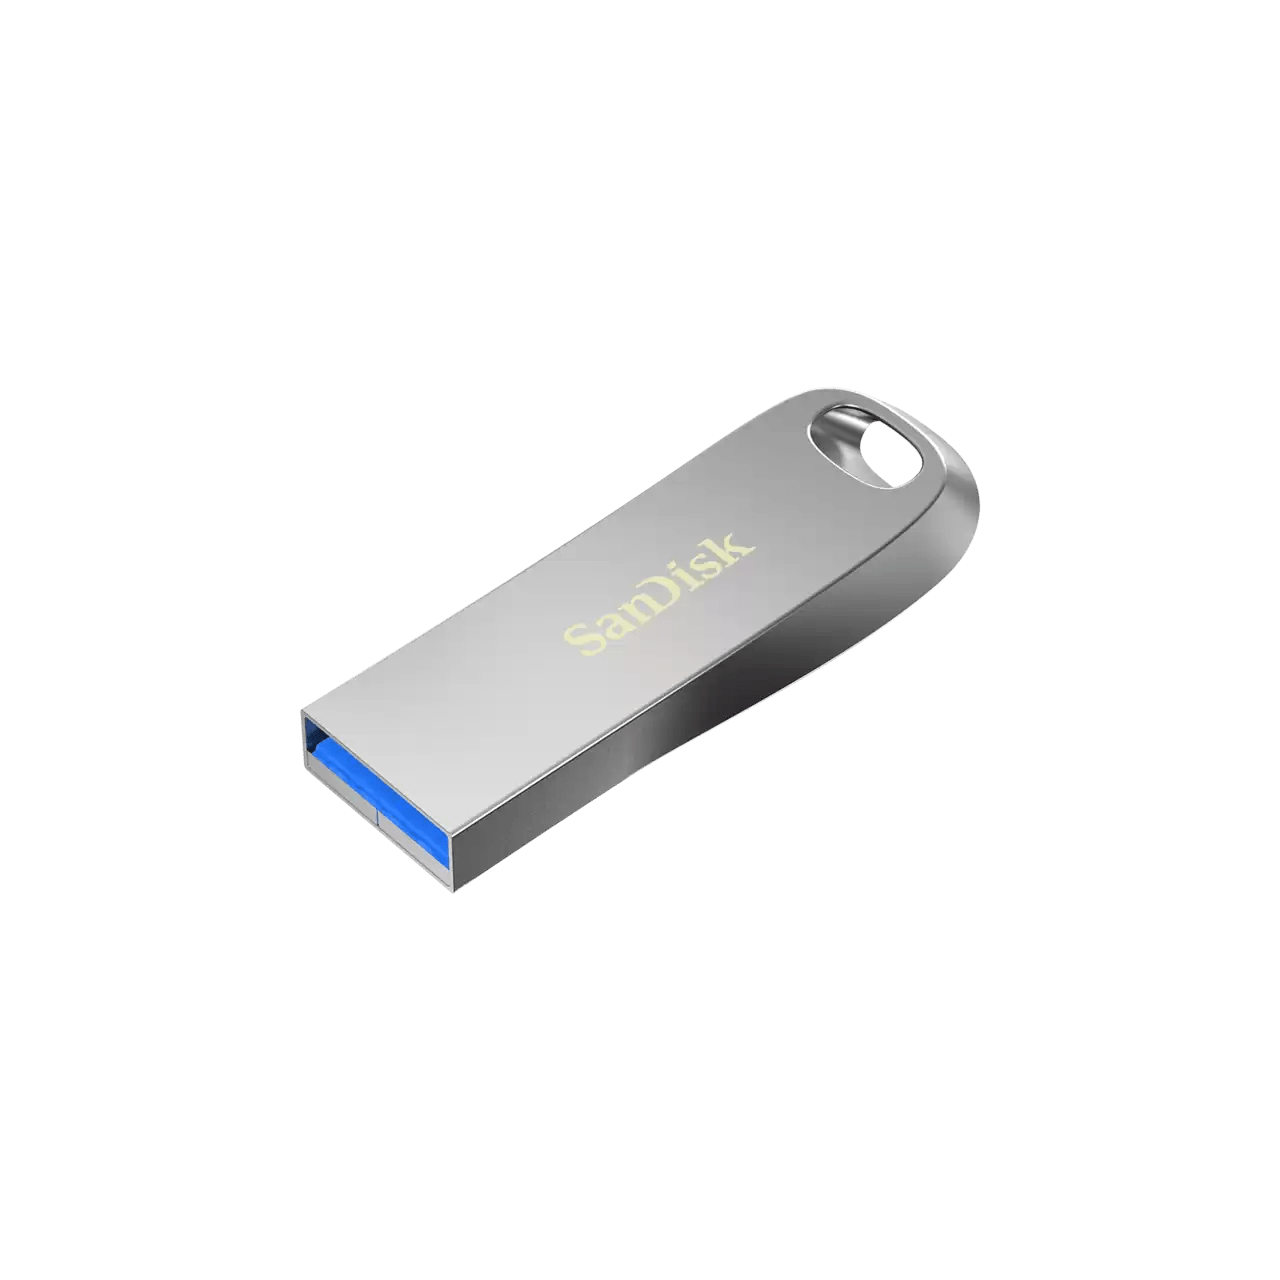 SanDisk 512GB Ultra Luxe USB 3.1 隨身碟 (SDCZ74 - 512G - G46) - Fever Electrics 電器熱網購平台